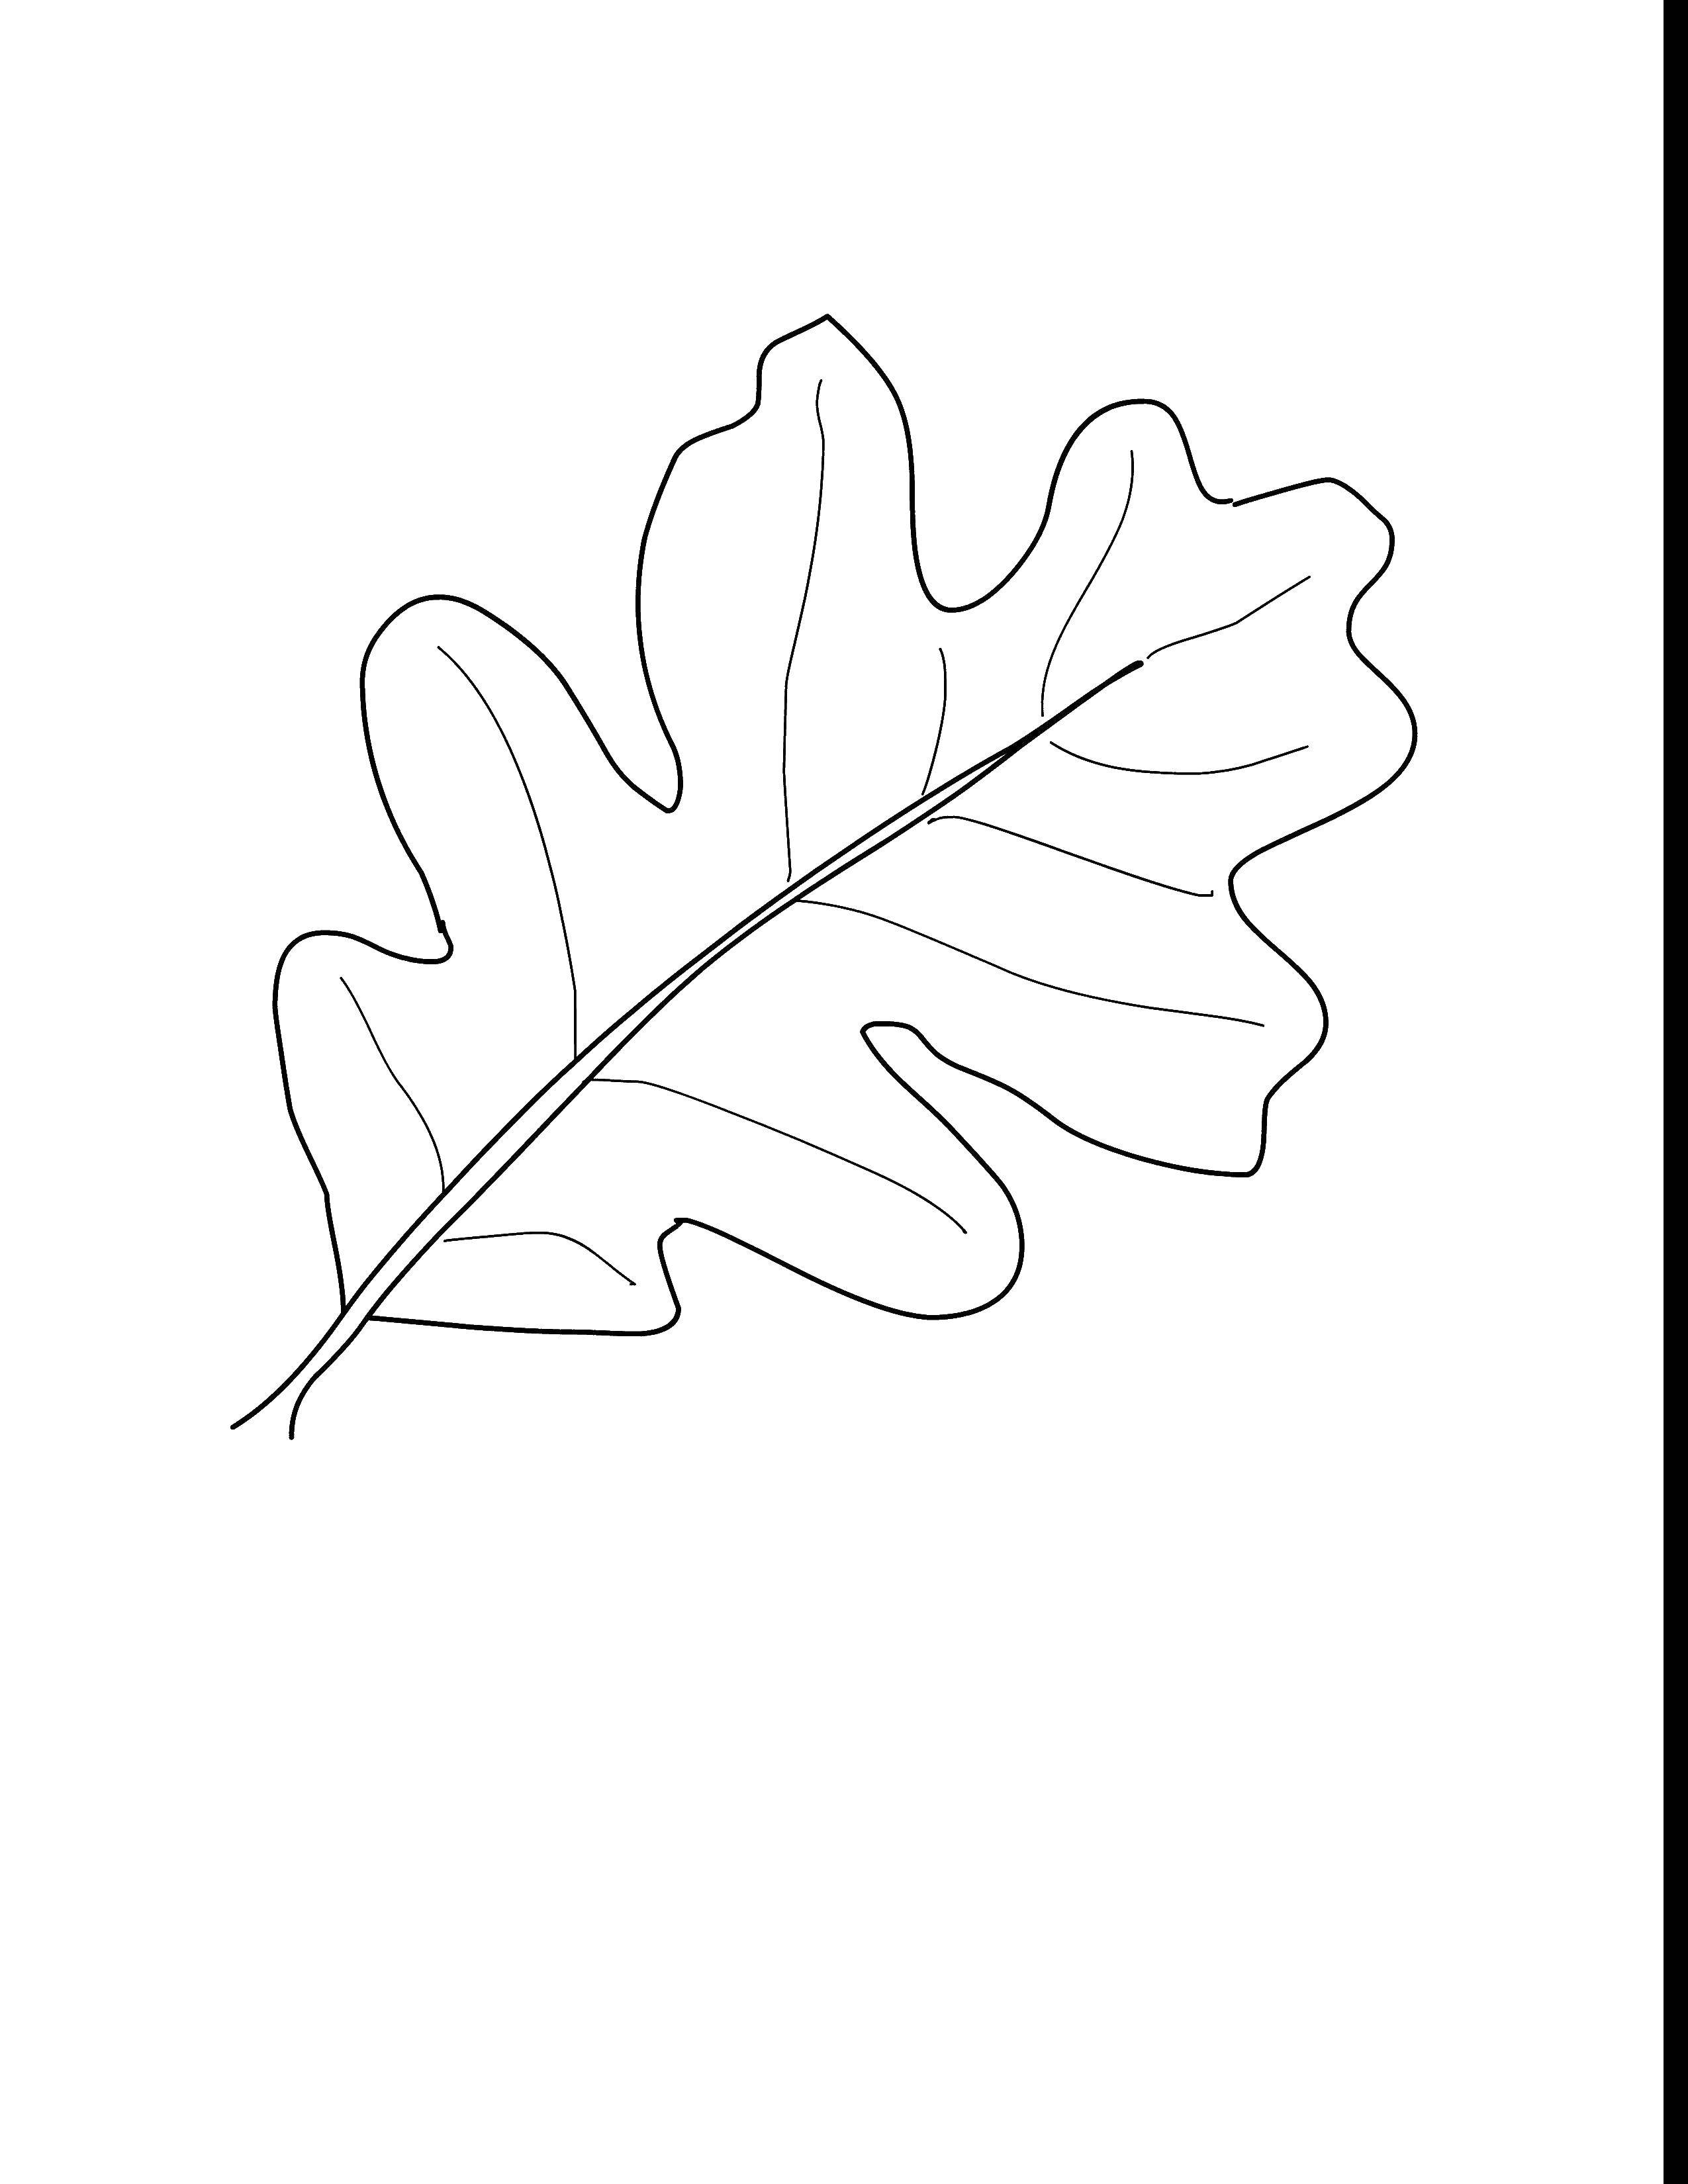 Coloring Oak leaf outline. Category Autumn. Tags:  leaf.